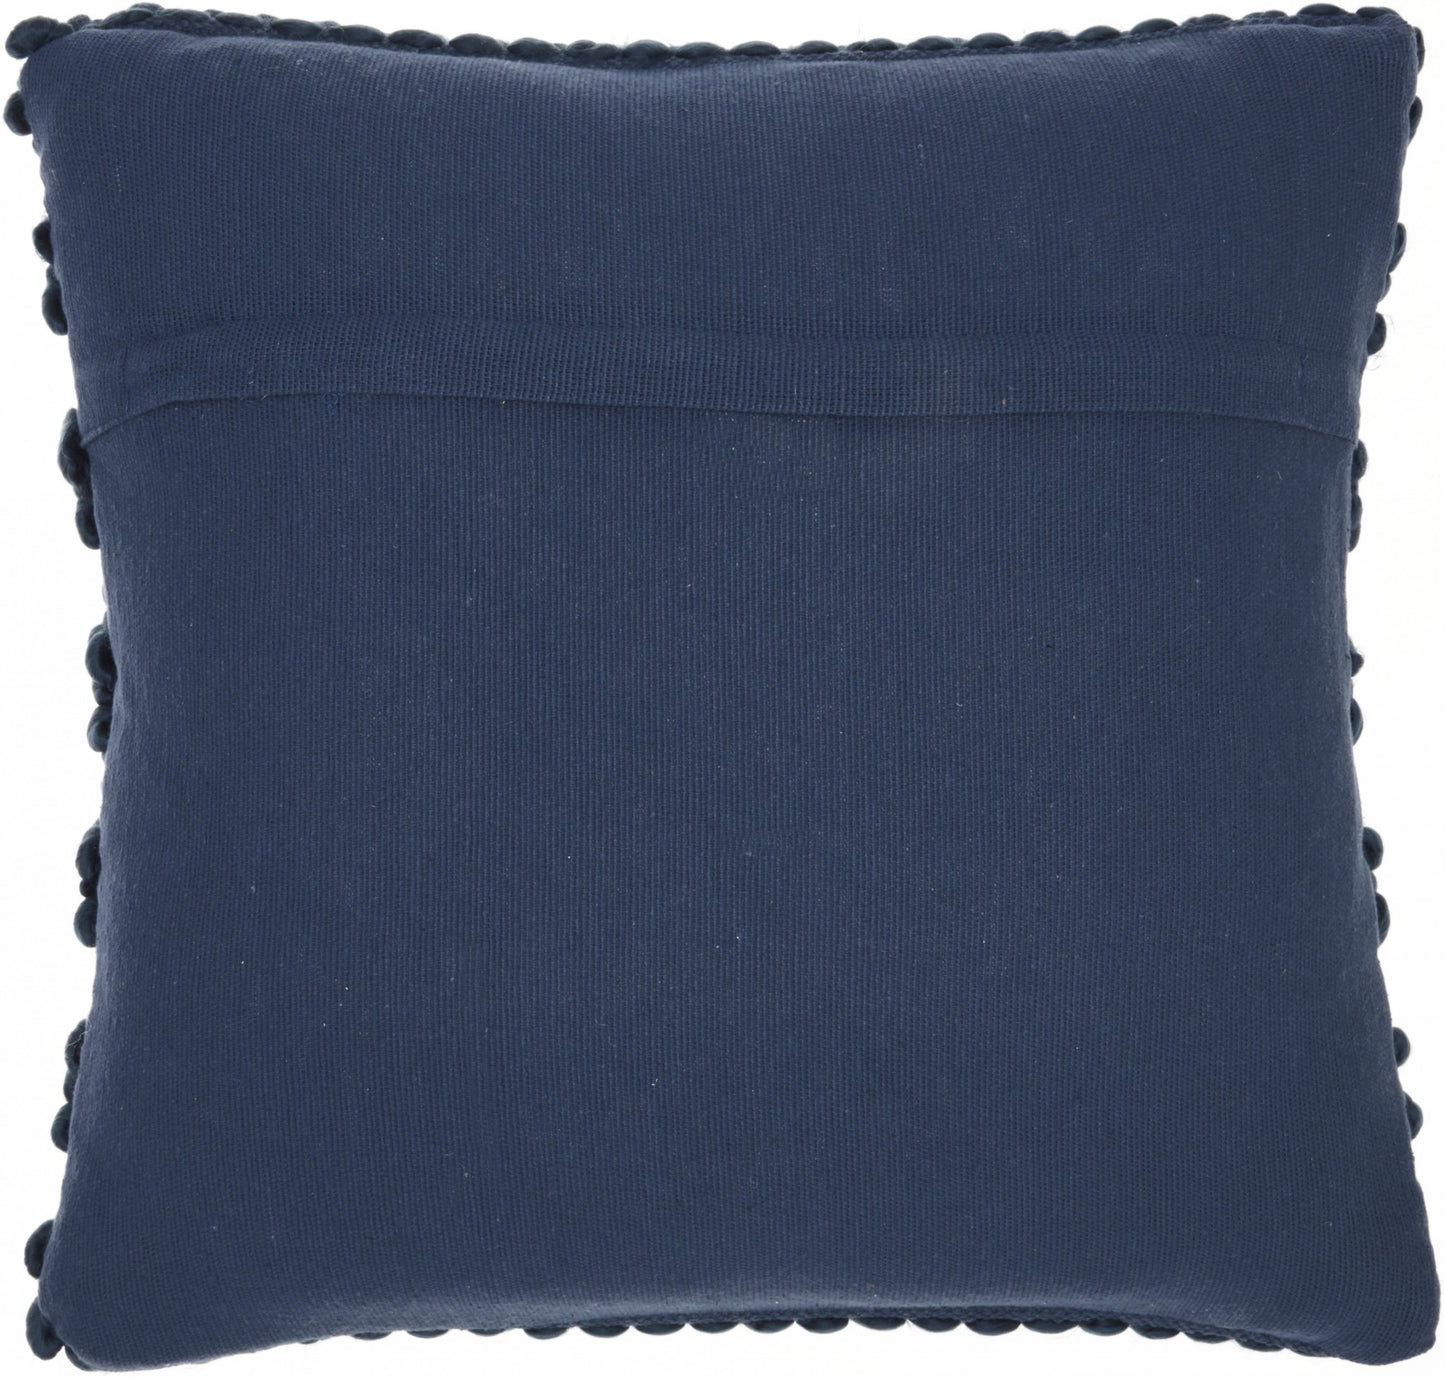 Xl Dark Blue Pom-Pom Detailed Throw Pillow